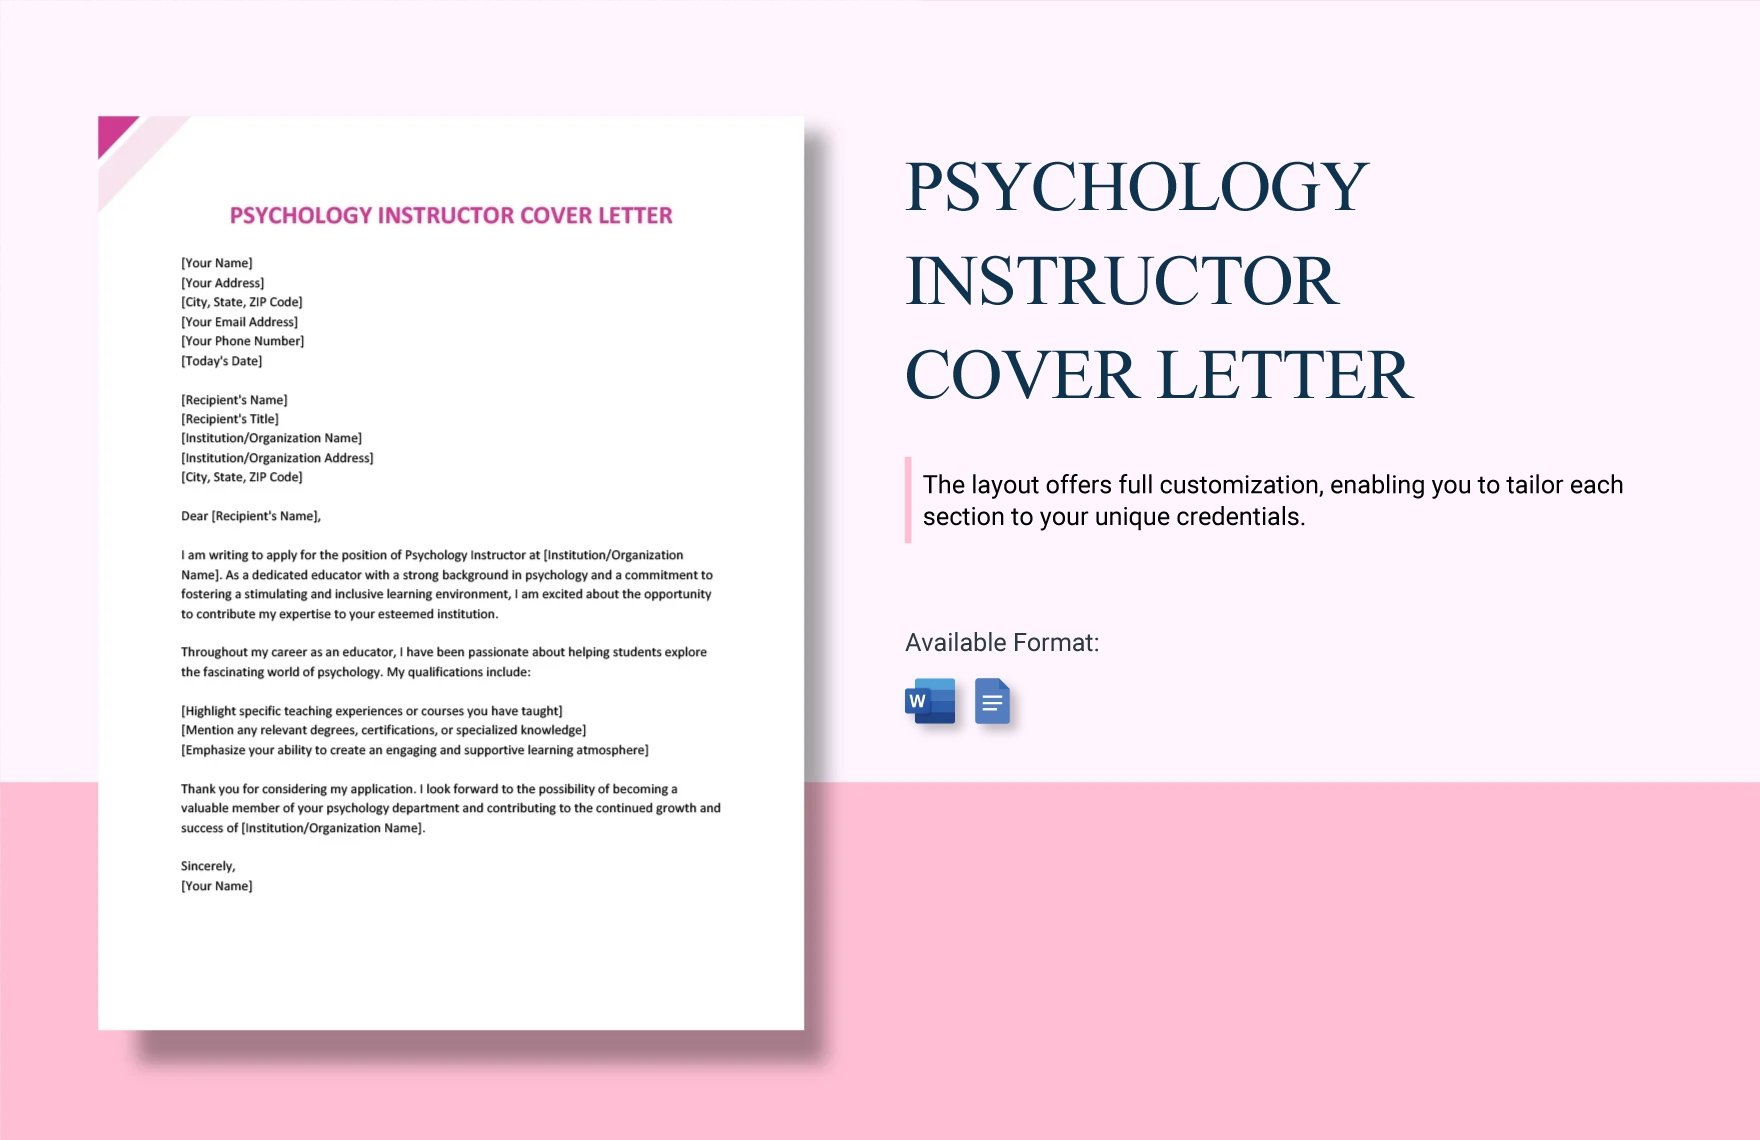 Psychology Instructor Cover Letter in Word, Google Docs